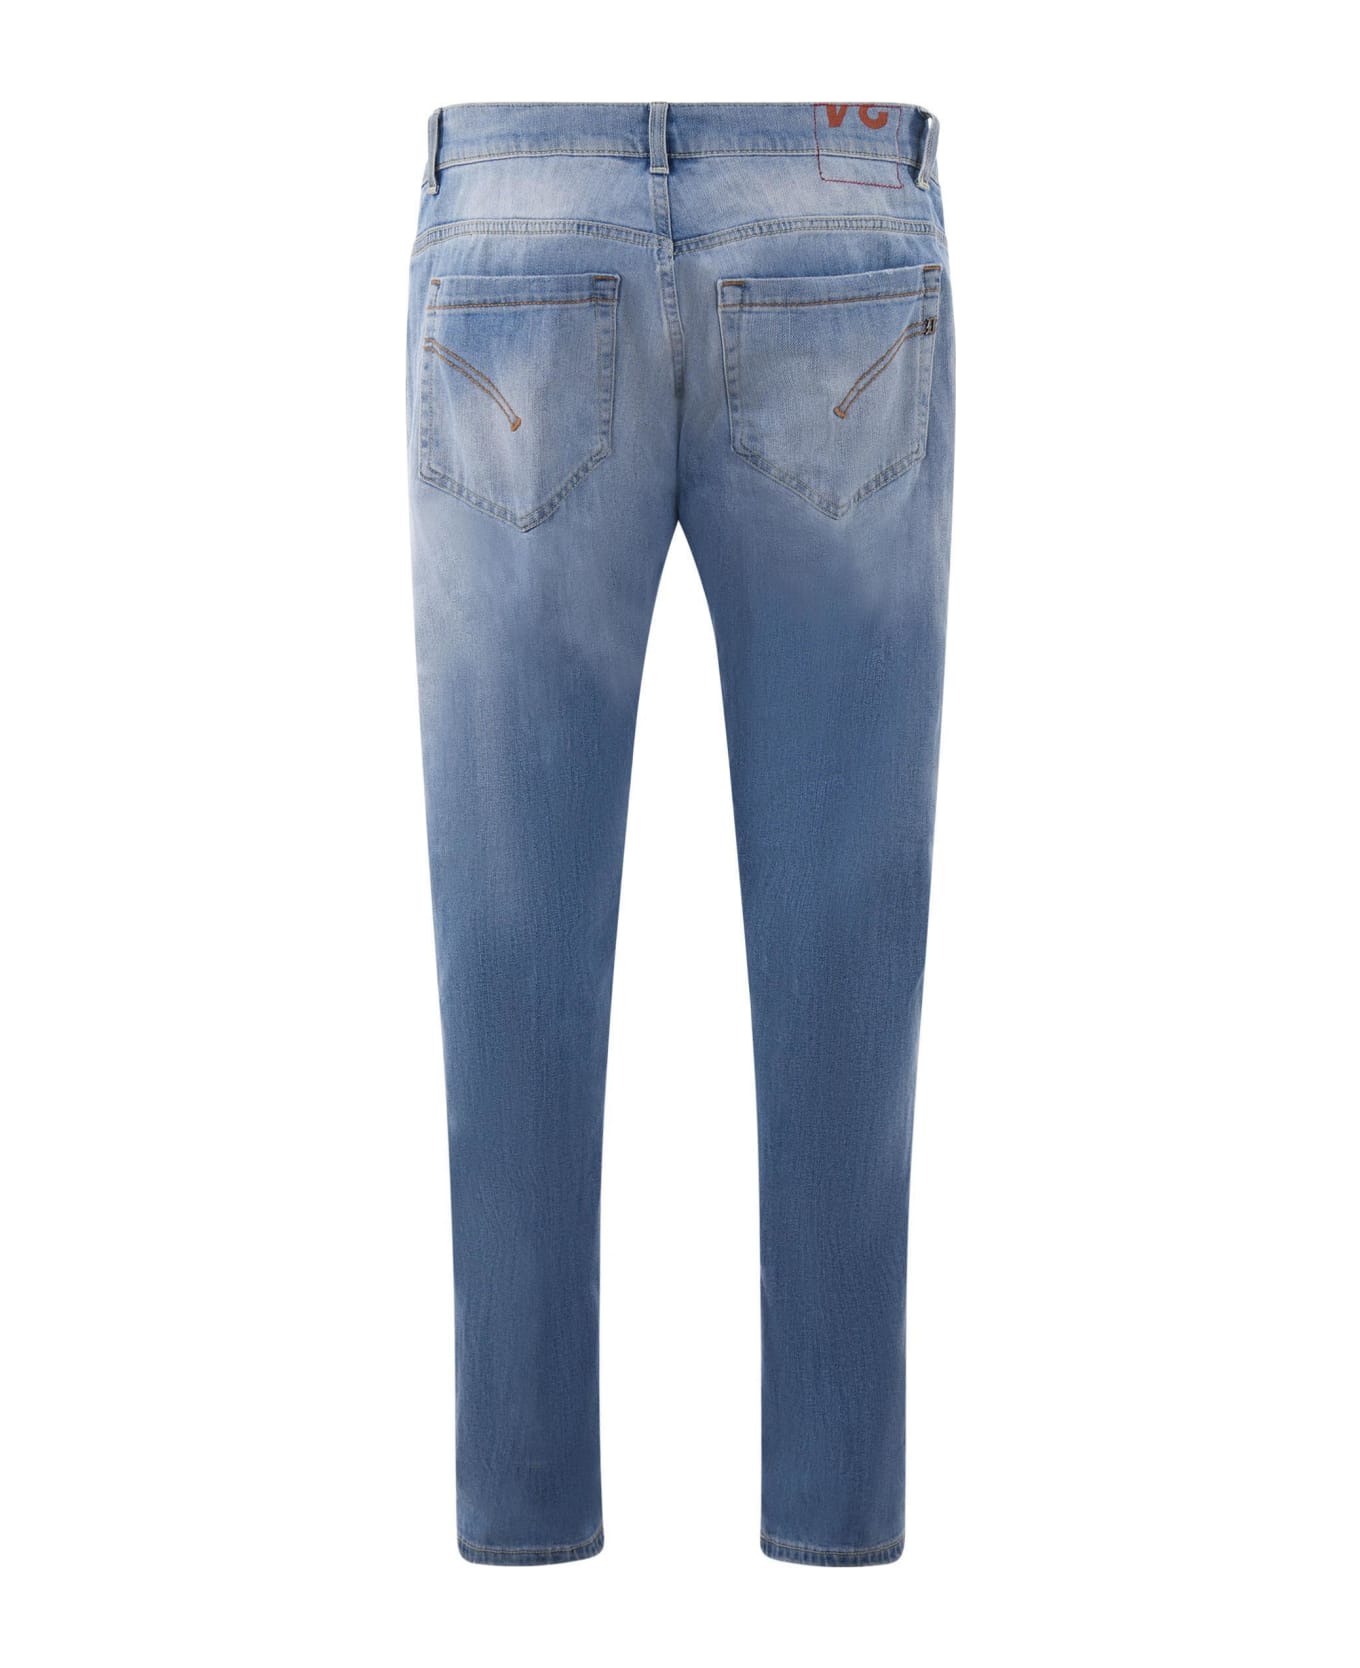 Dondup 'george' Jeans - LIGHT BLUE